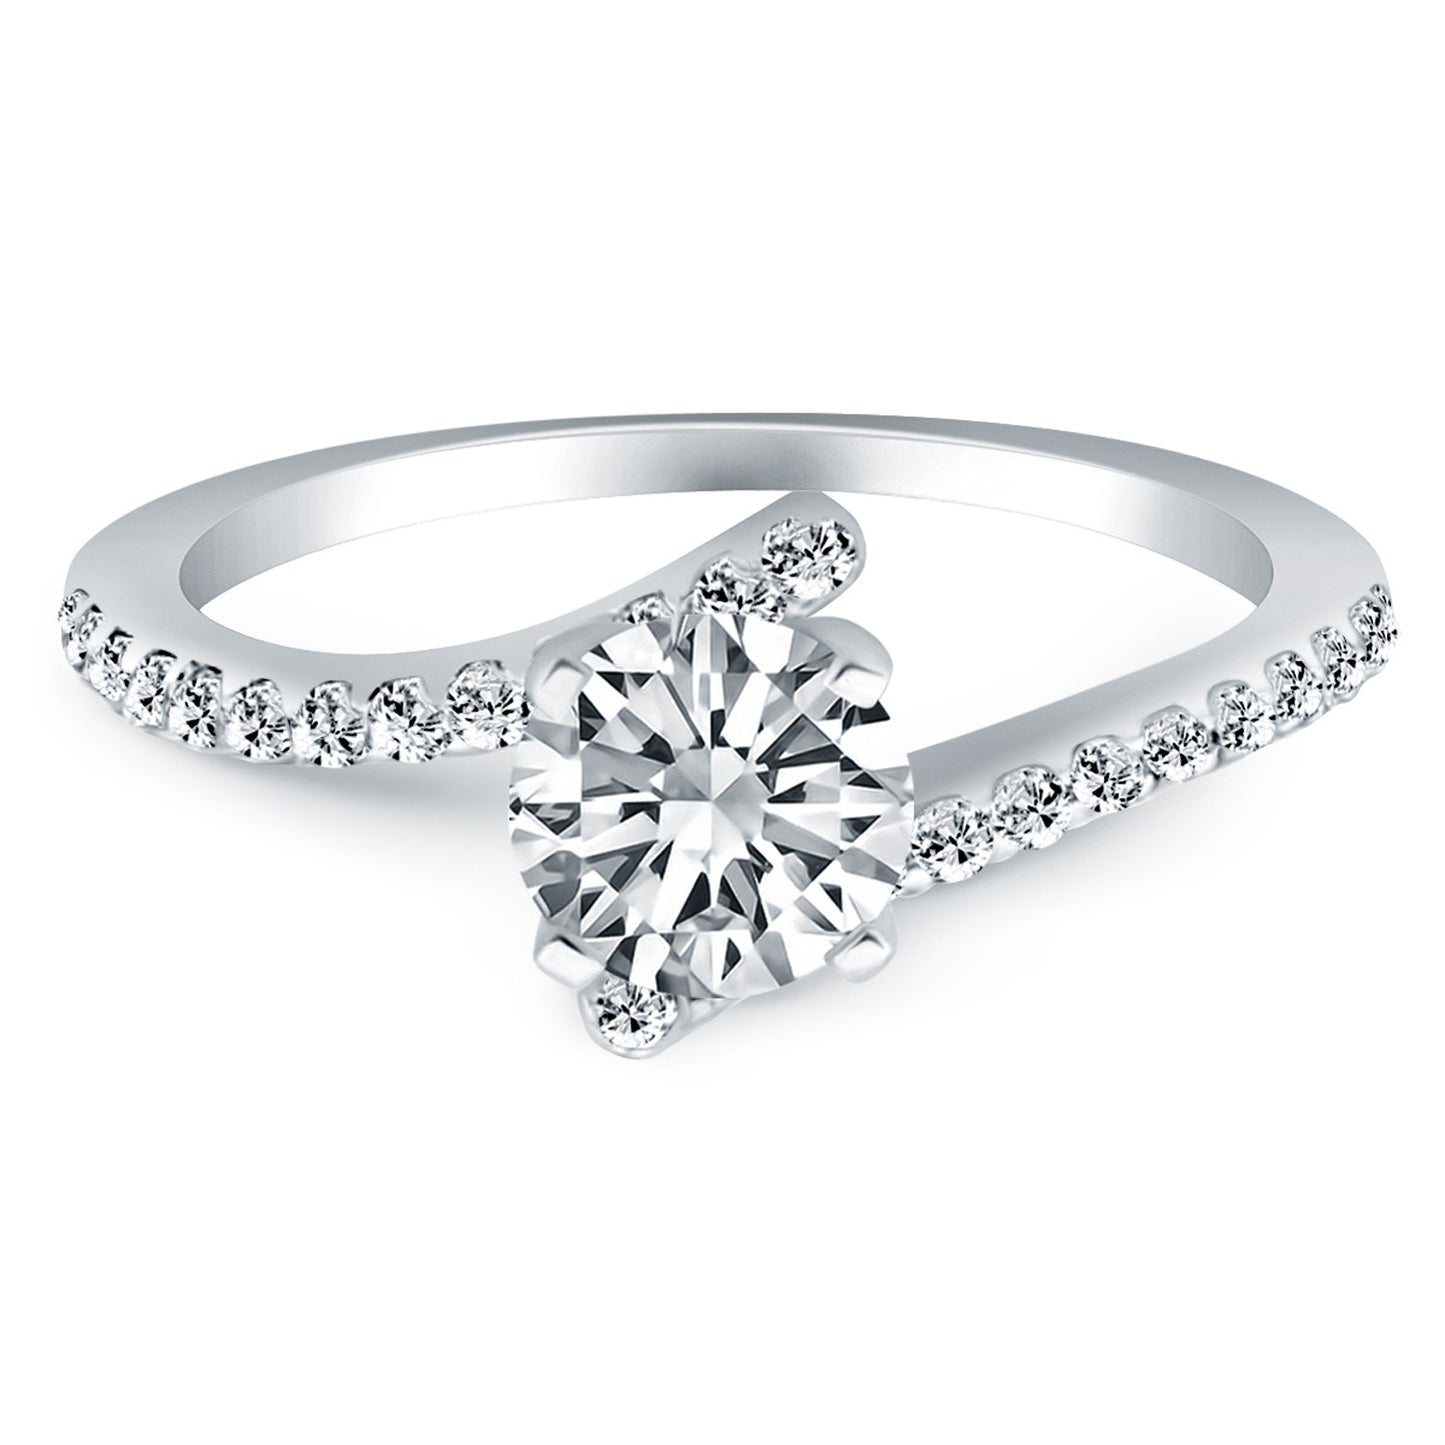 Open Shank Bypass Diamond Engagement Ring